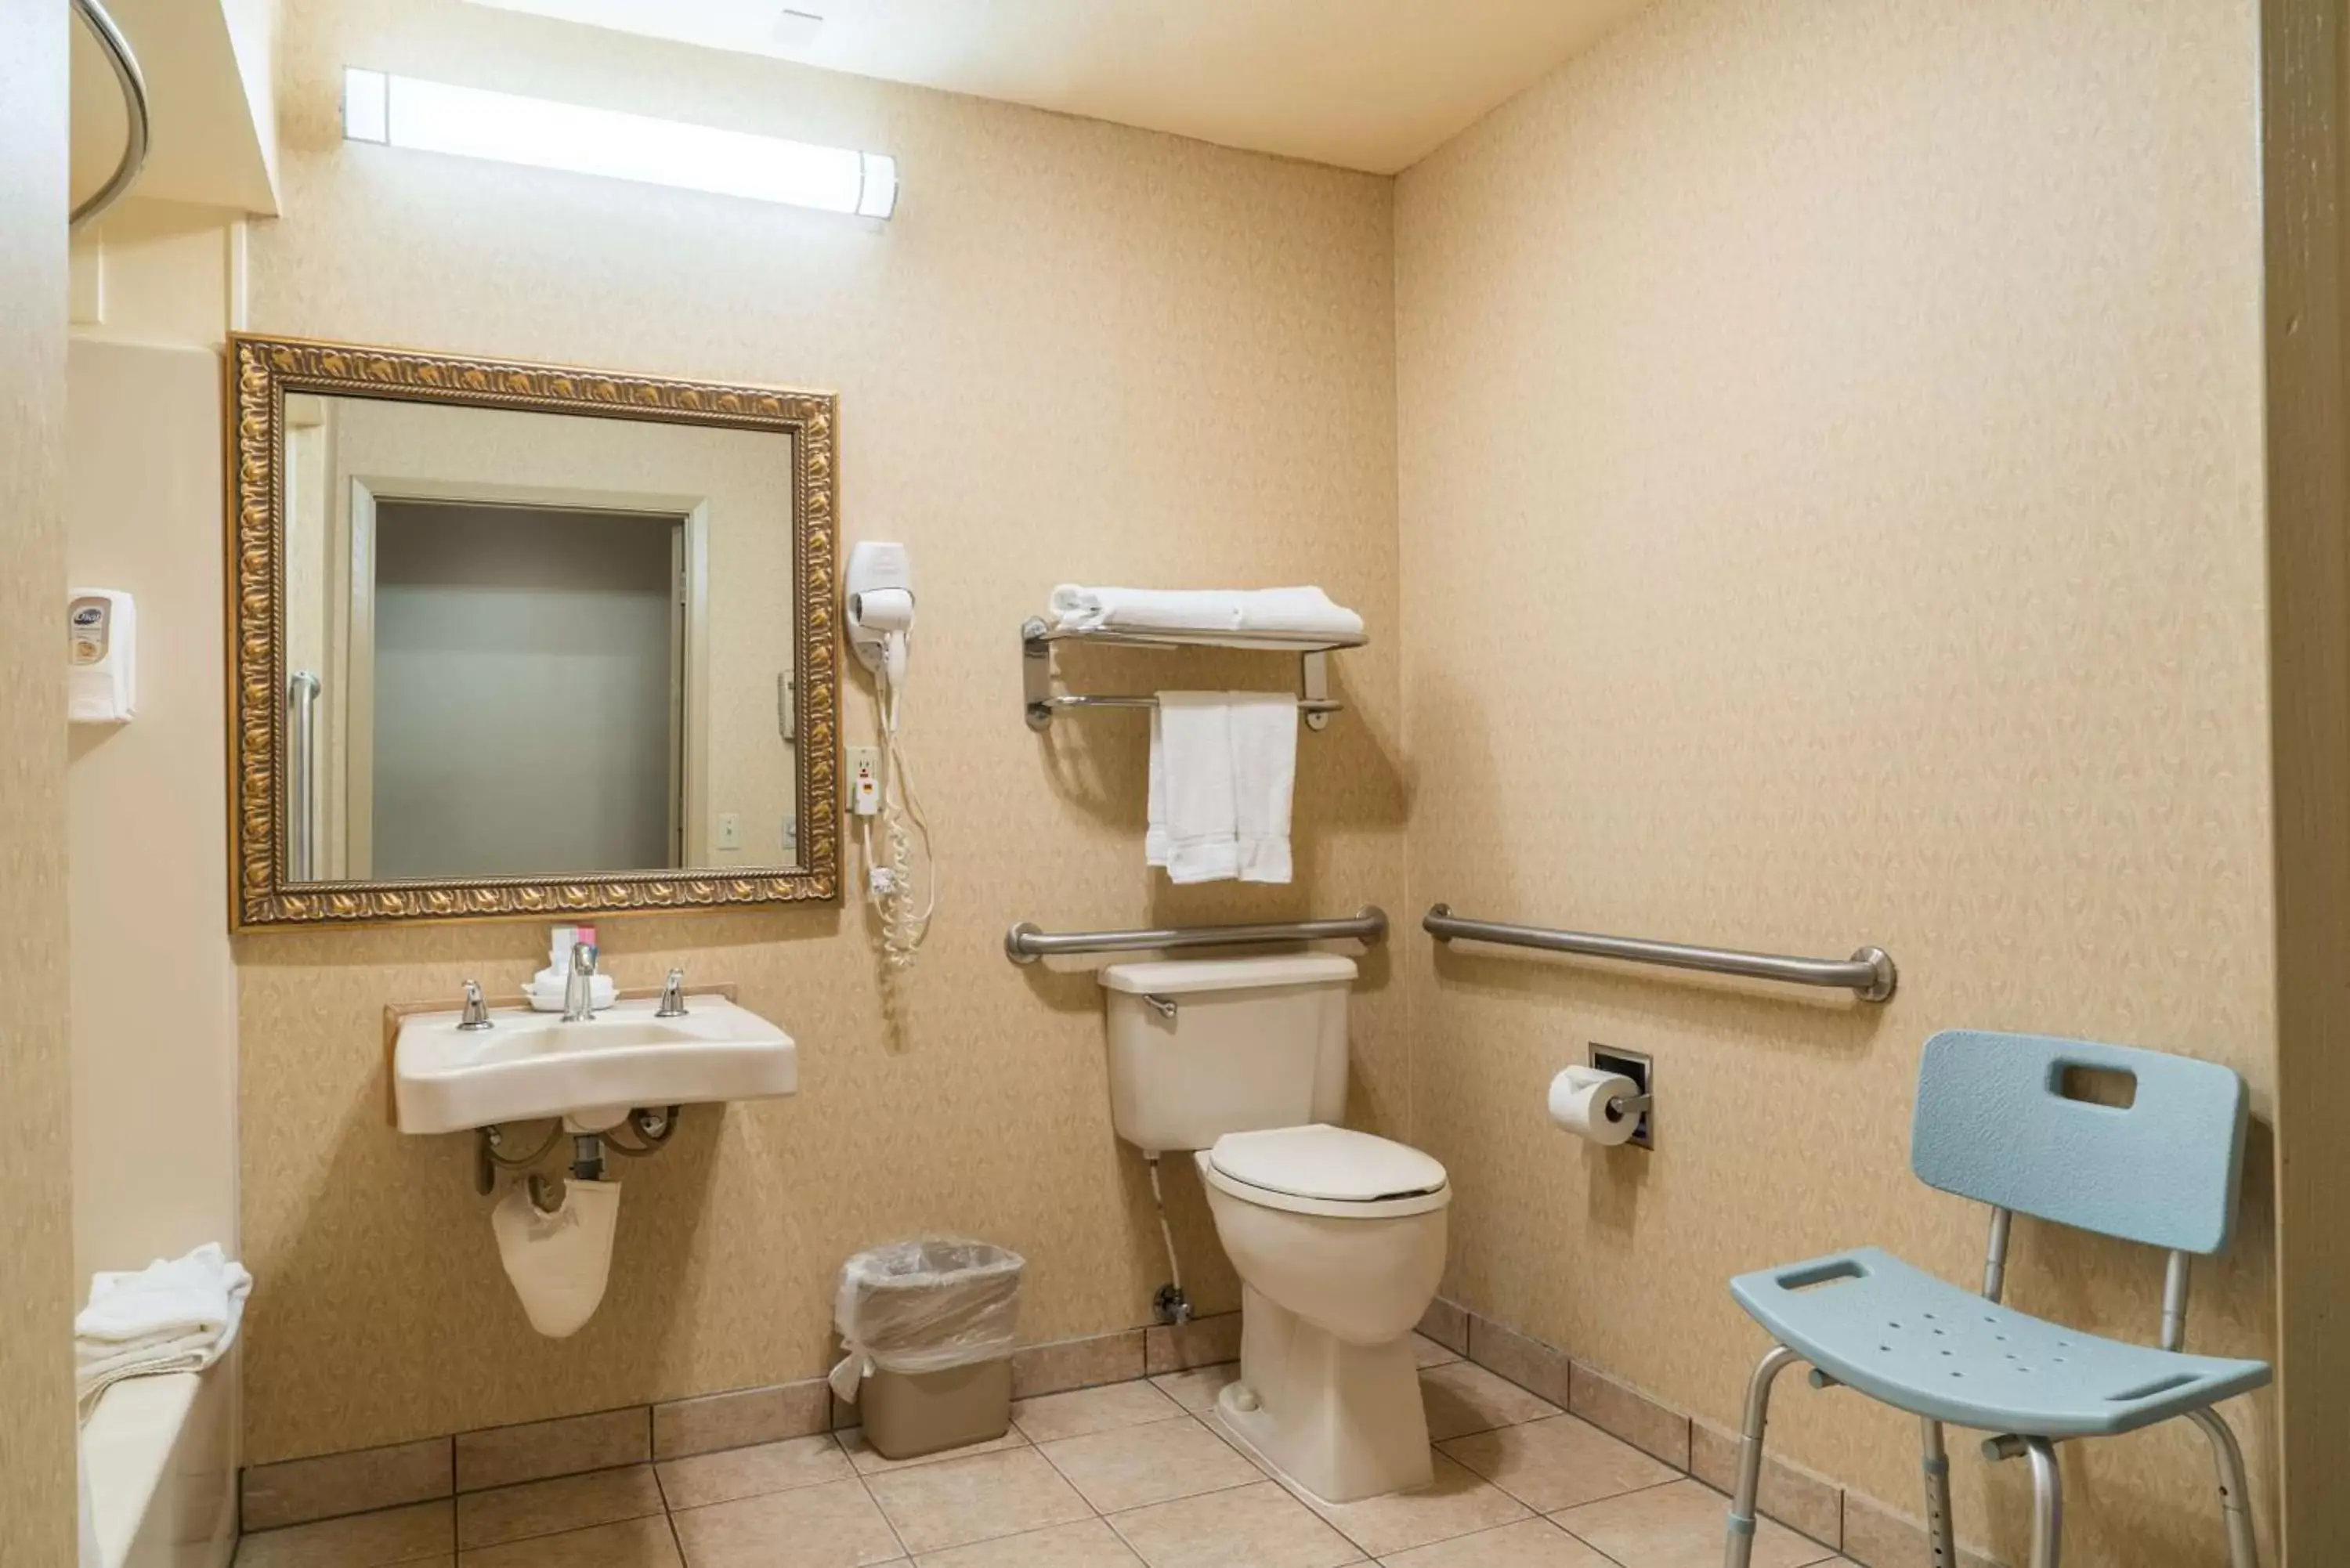 Photo of the whole room, Bathroom in Best Western Inn & Suites